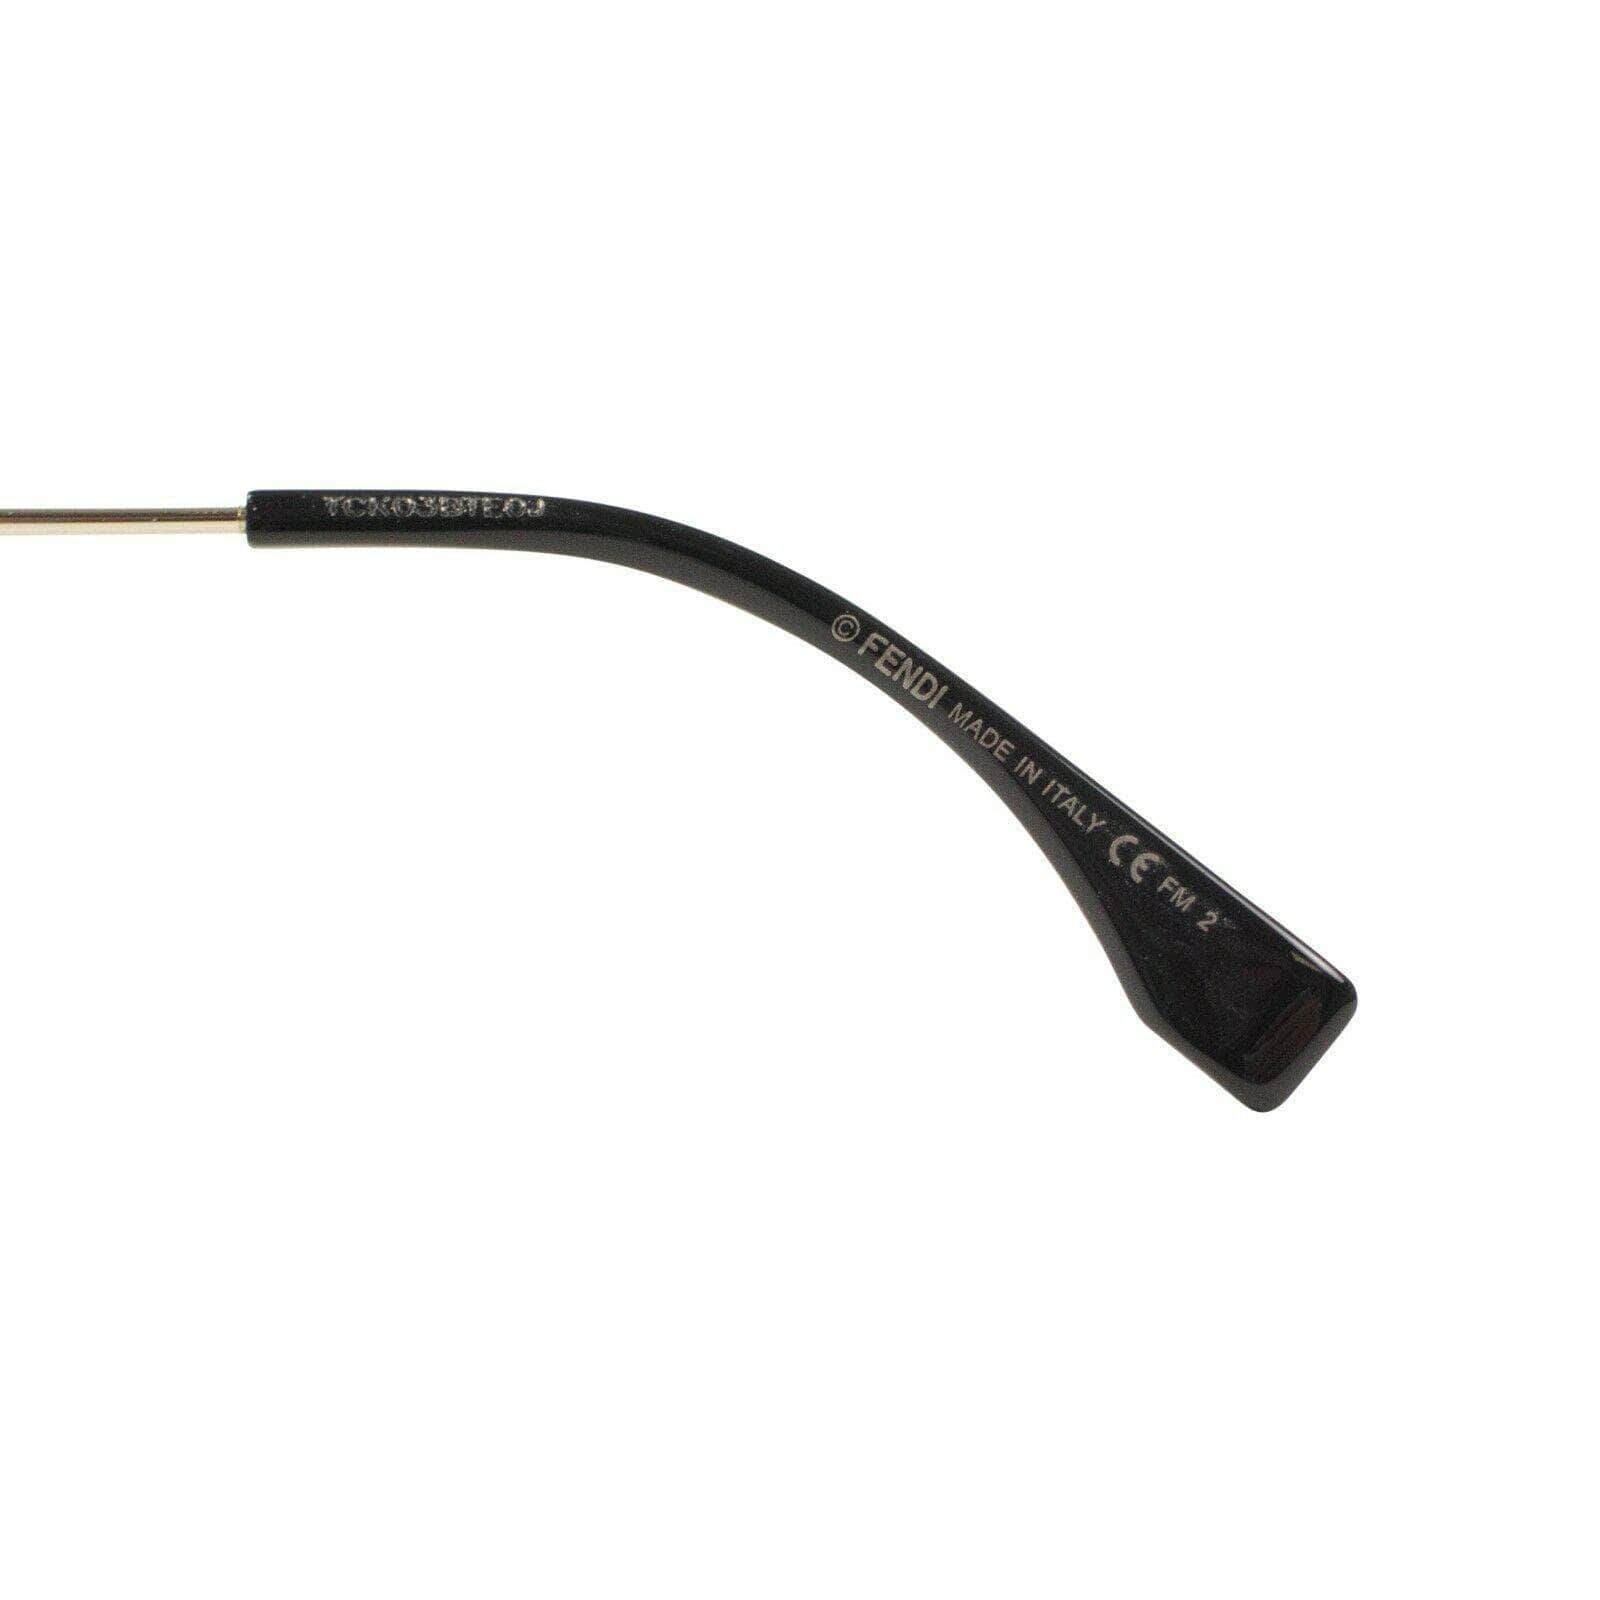 Women's Fendi Plastic Cat Eye Sunglasses - Beige / Black / Clear